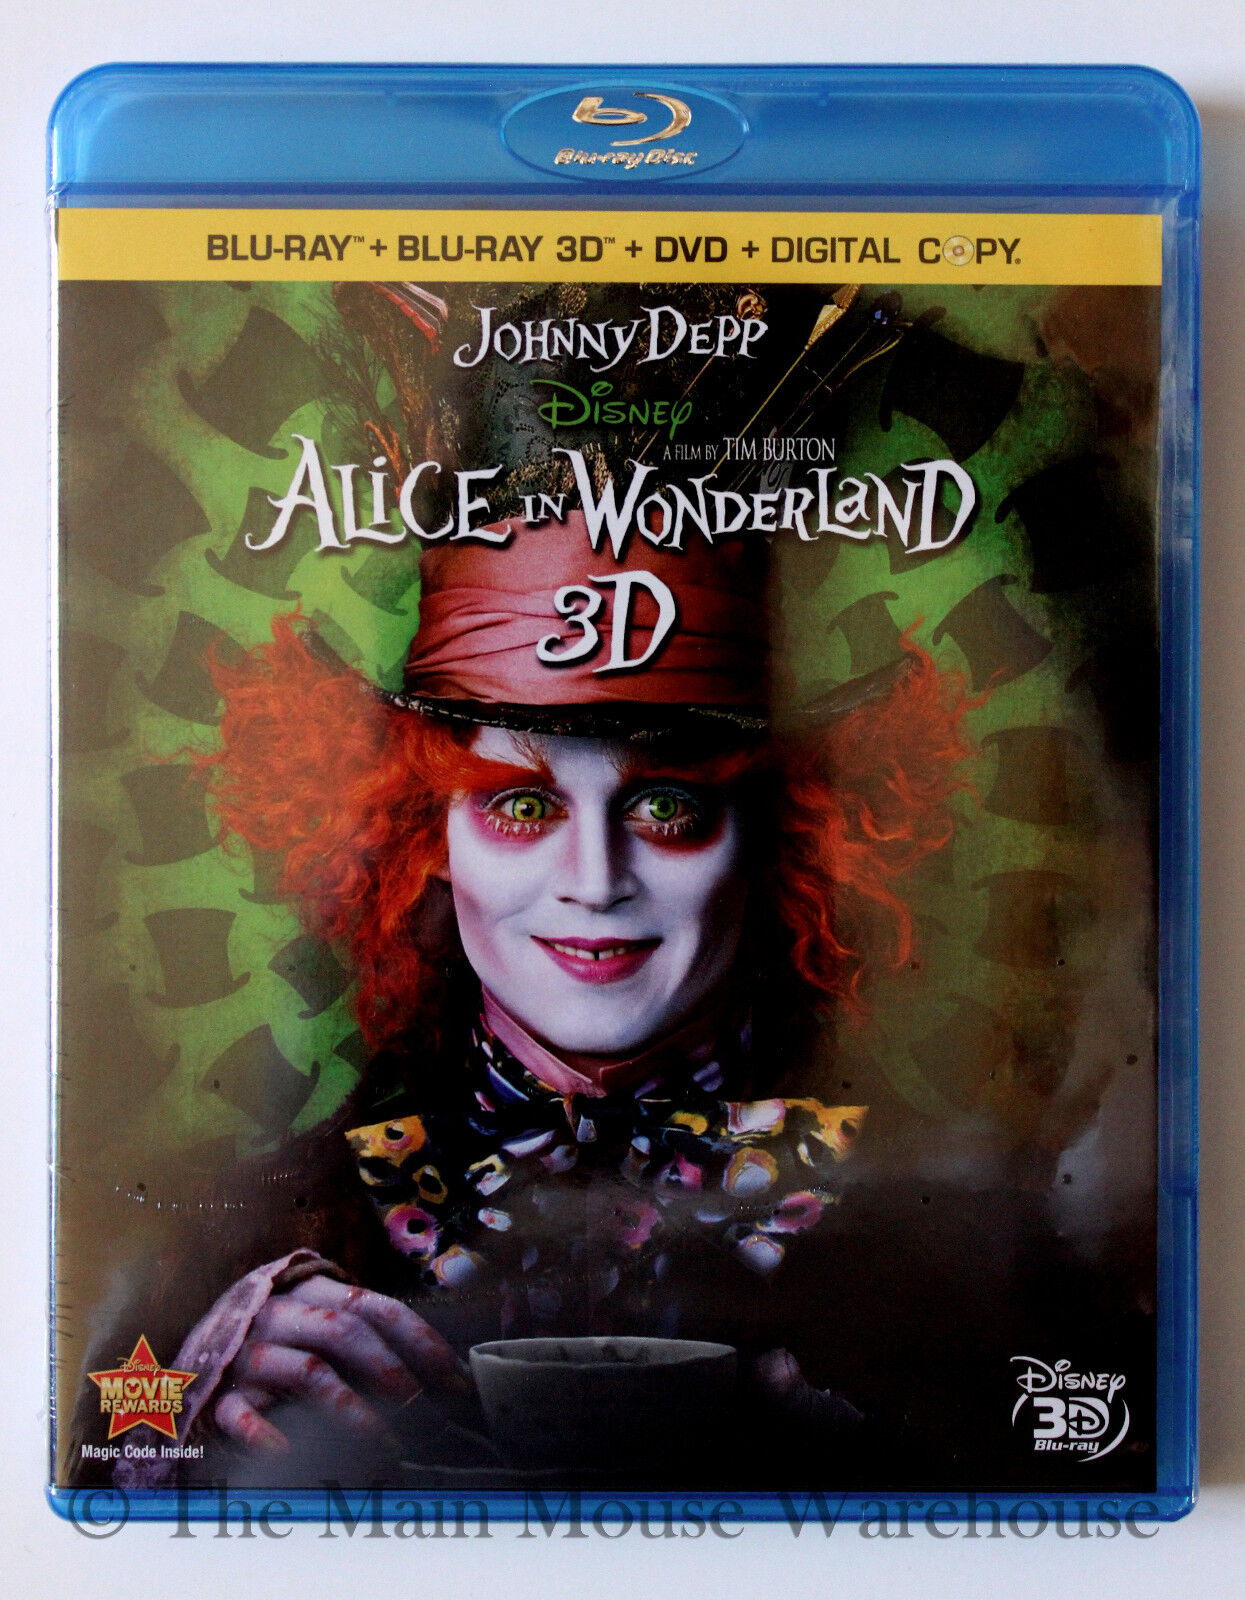 Disney Johnny Depp Live Action Alice in Wonderland 3D Blu-ray DVD Digital Copy